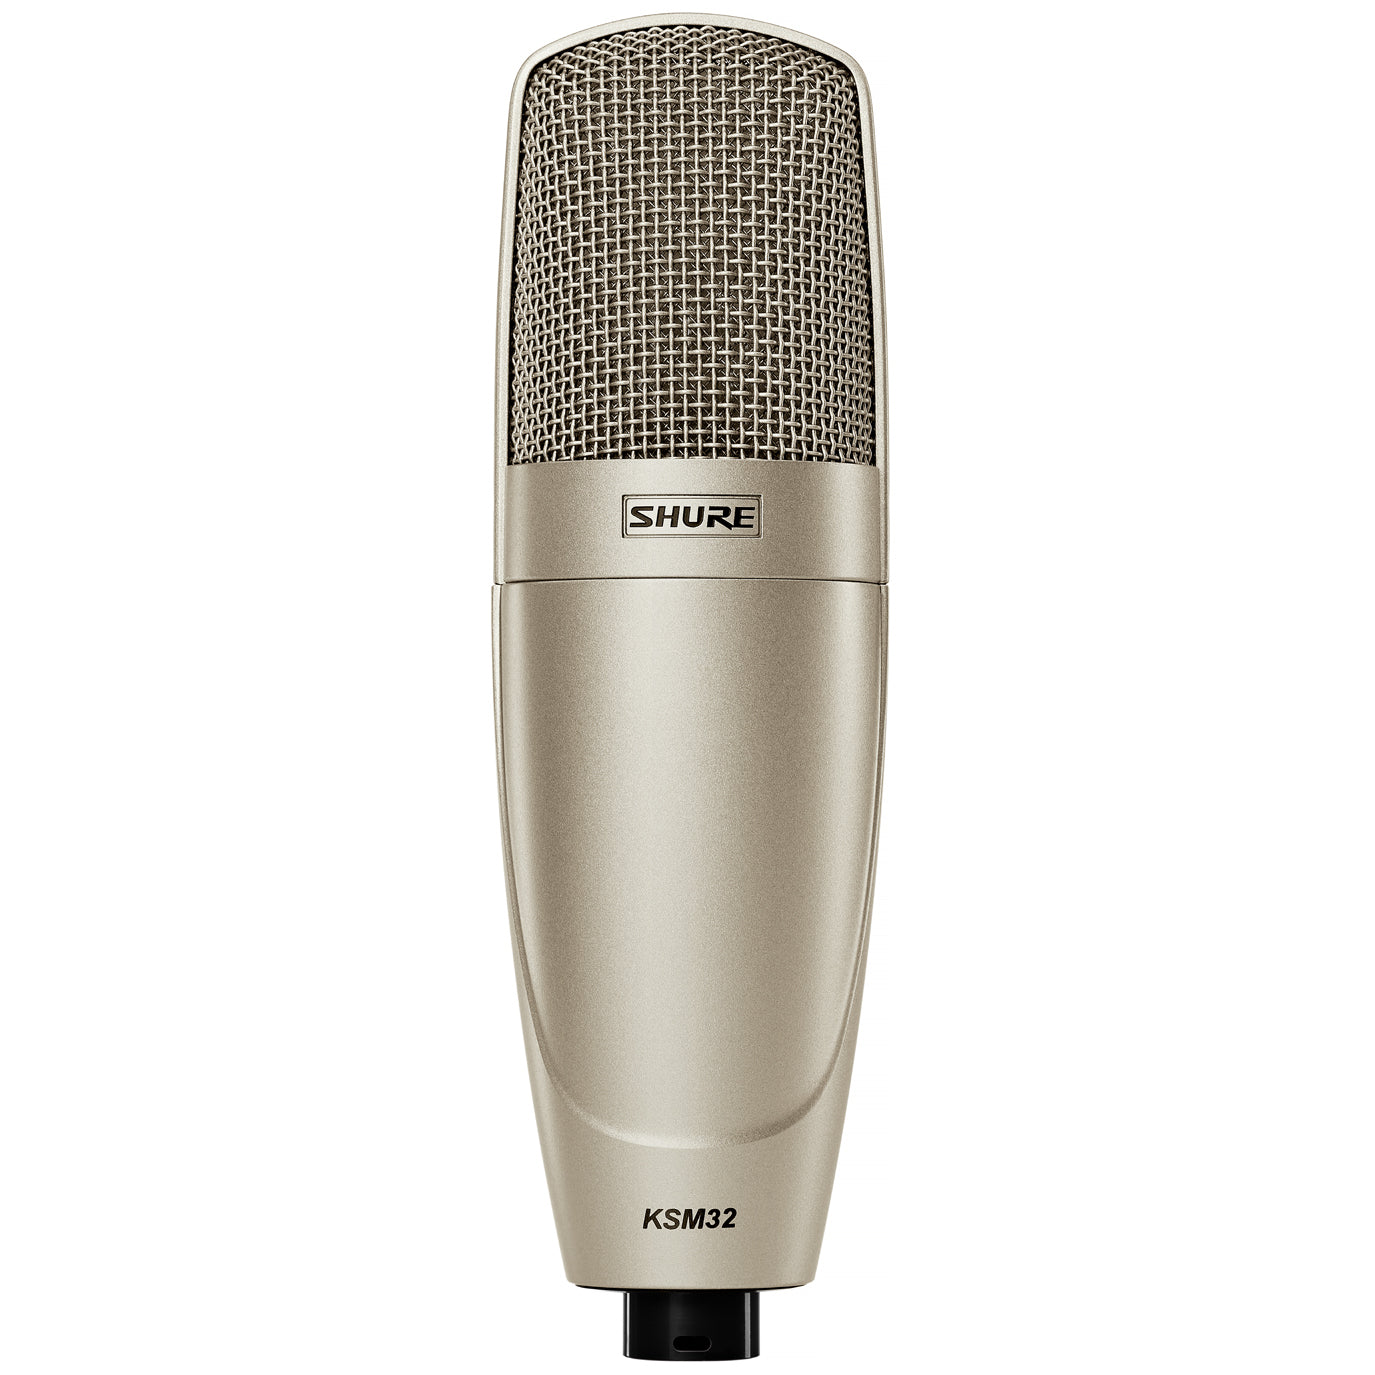 Shure KSM32 Studio Condenser Microphone, Champagne